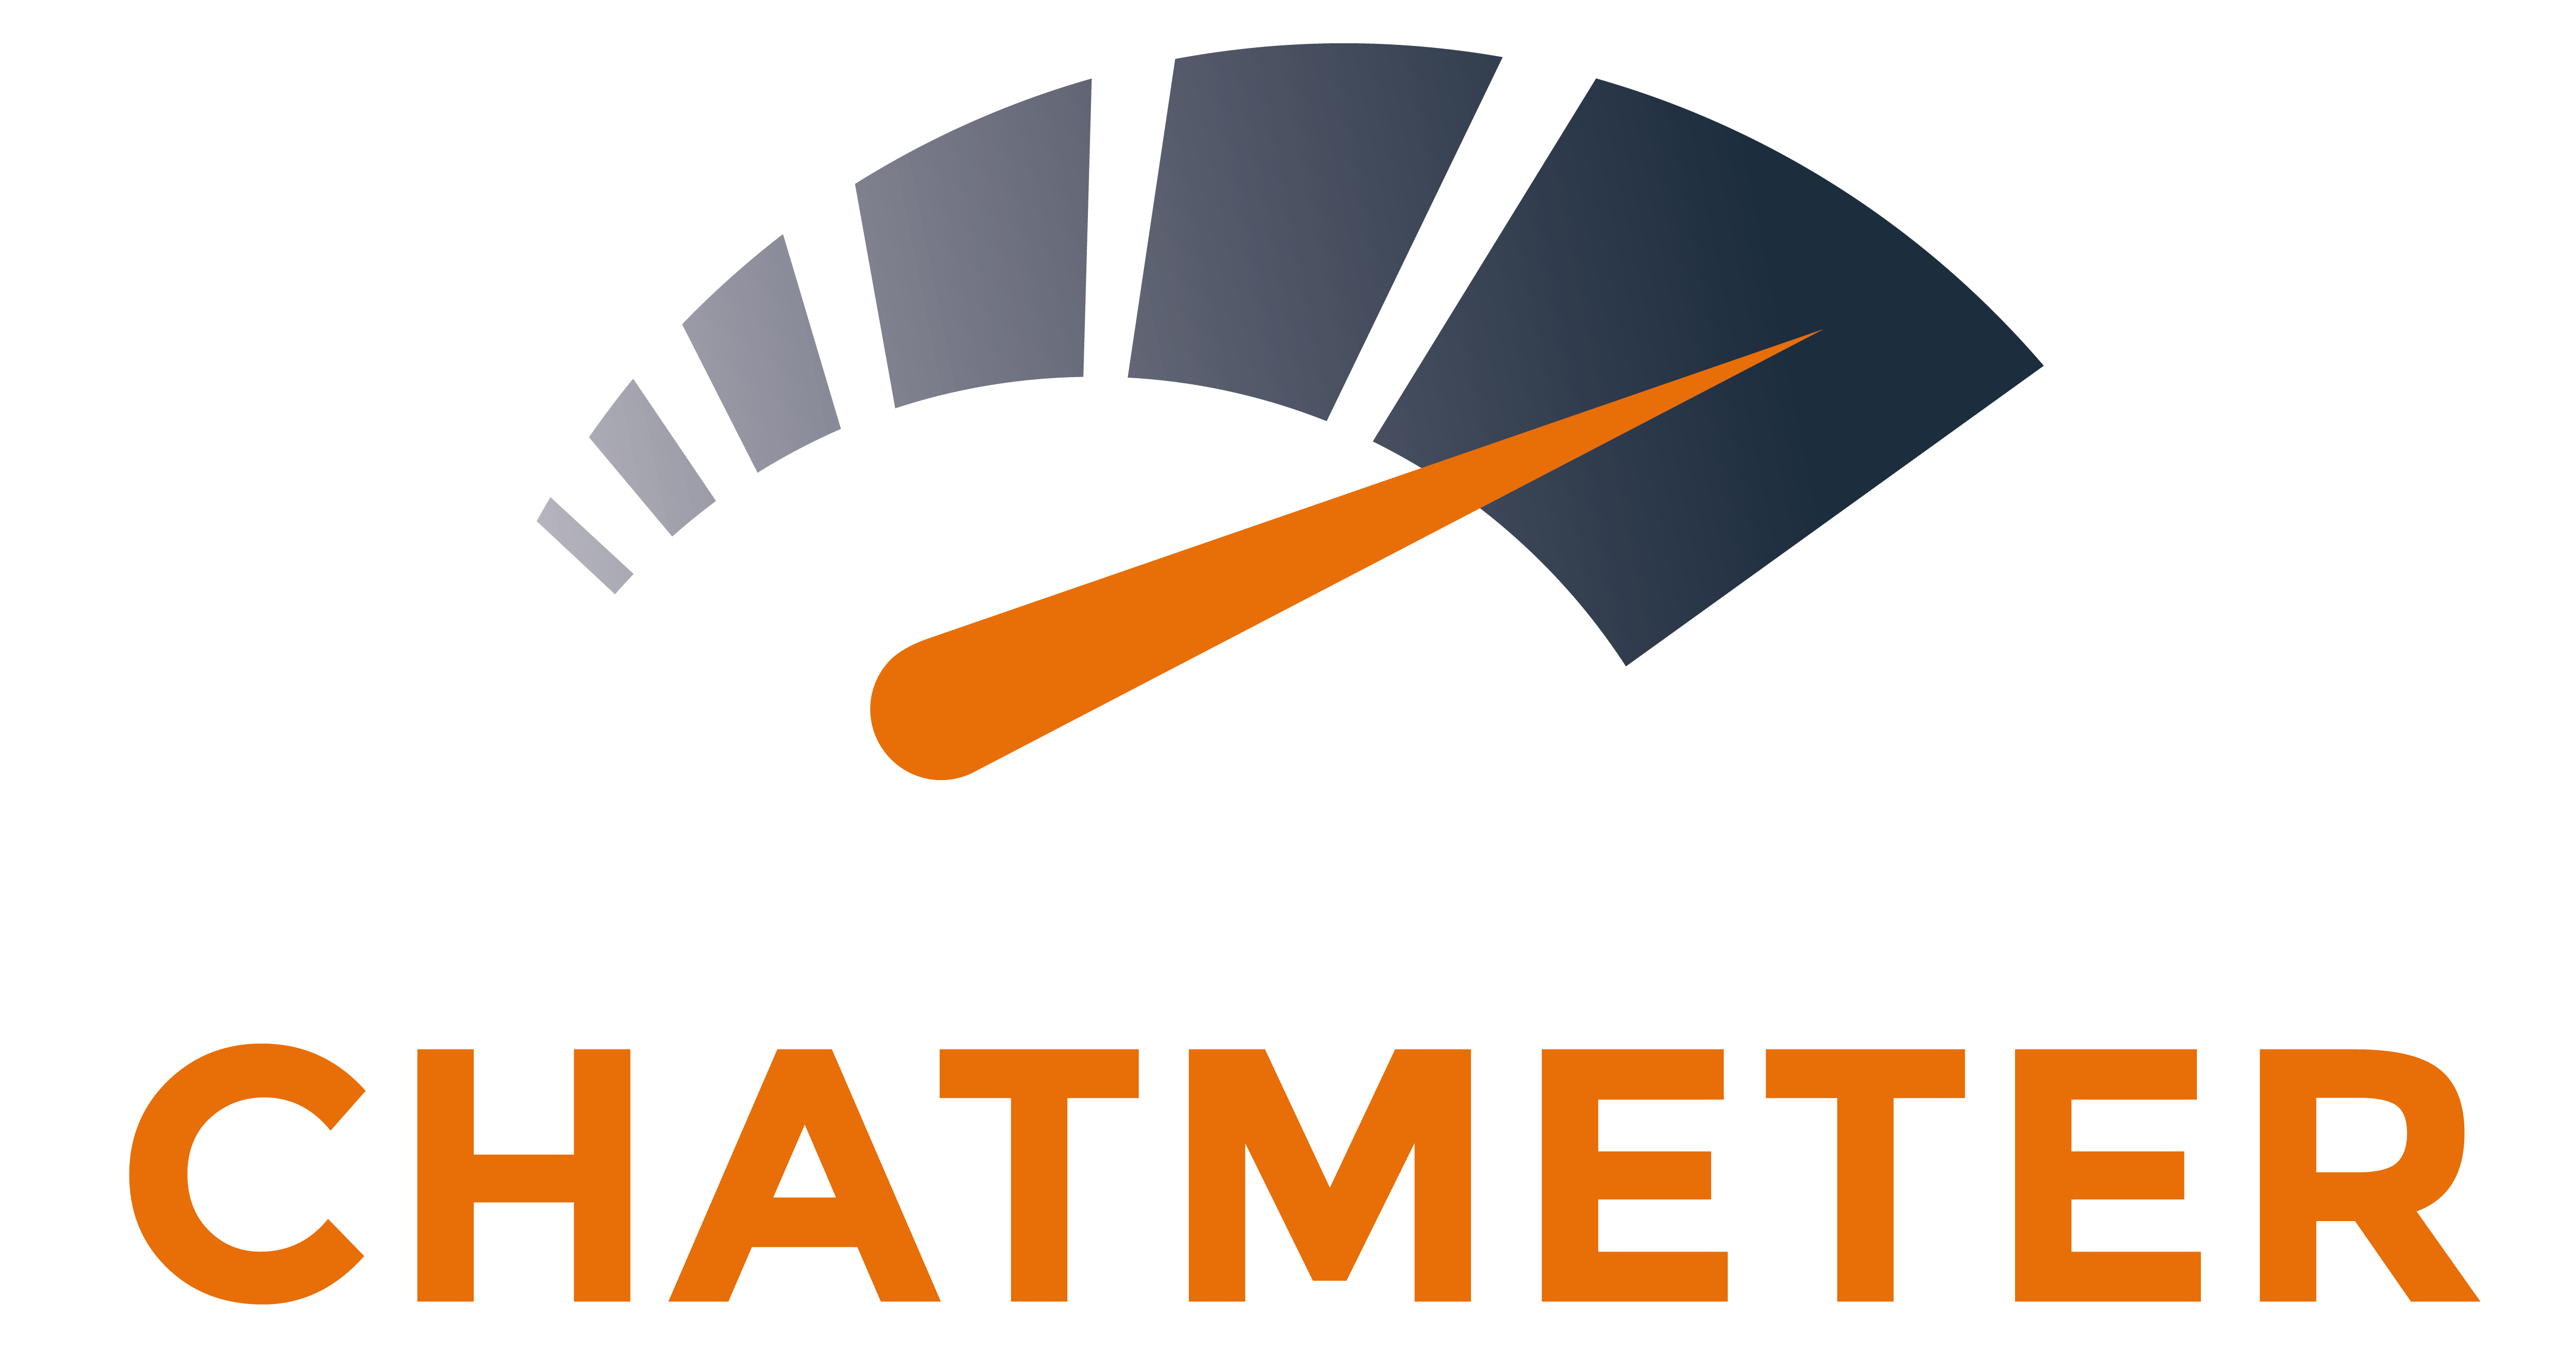 ChatMeter - Reputation Management Software